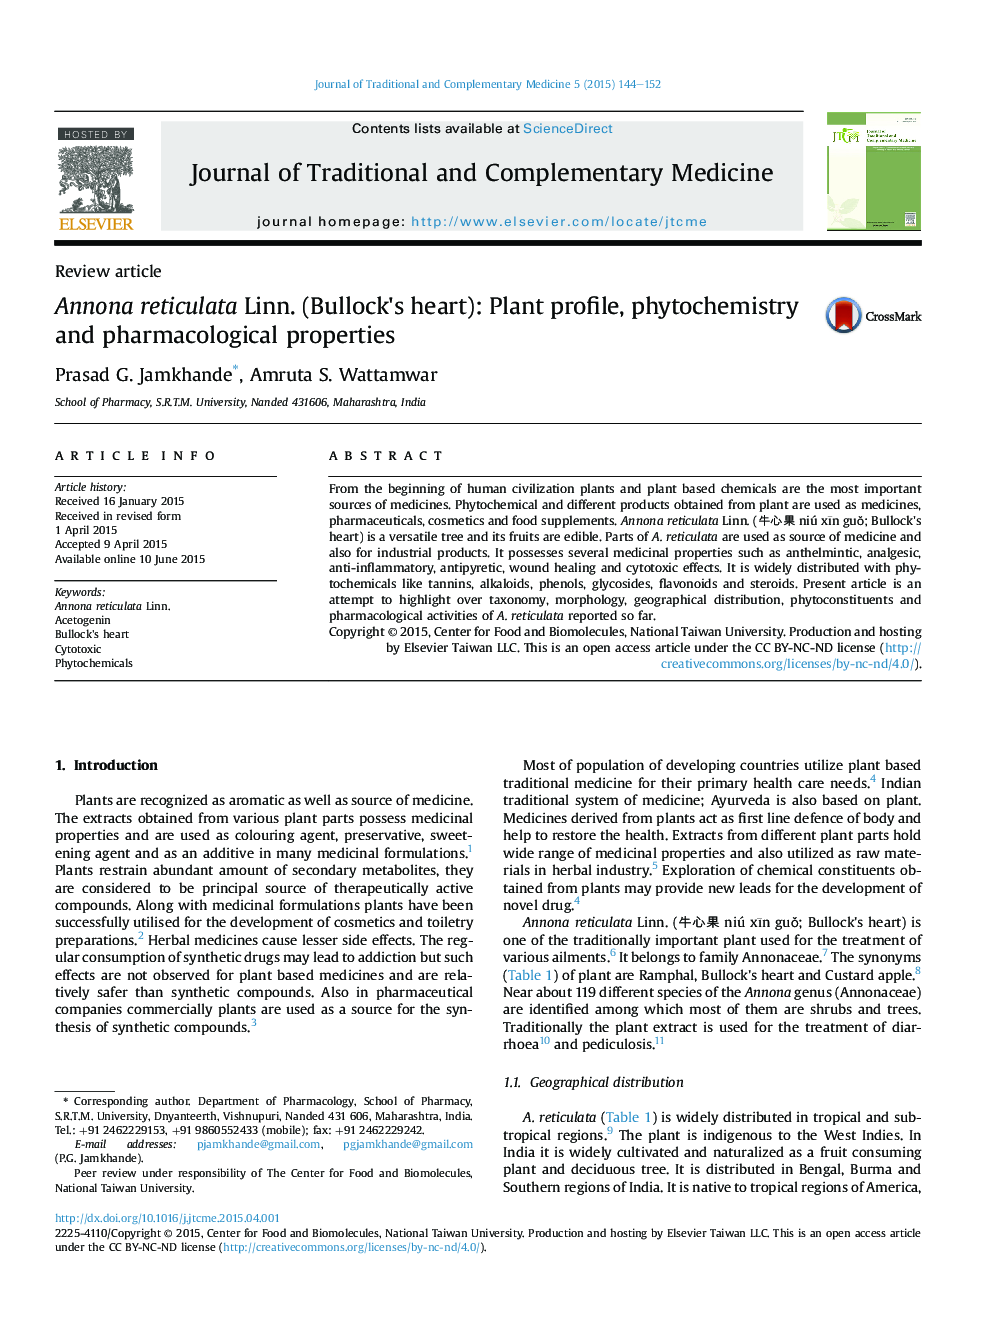 Annona reticulata Linn. (Bullock's heart): Plant profile, phytochemistry and pharmacological properties 